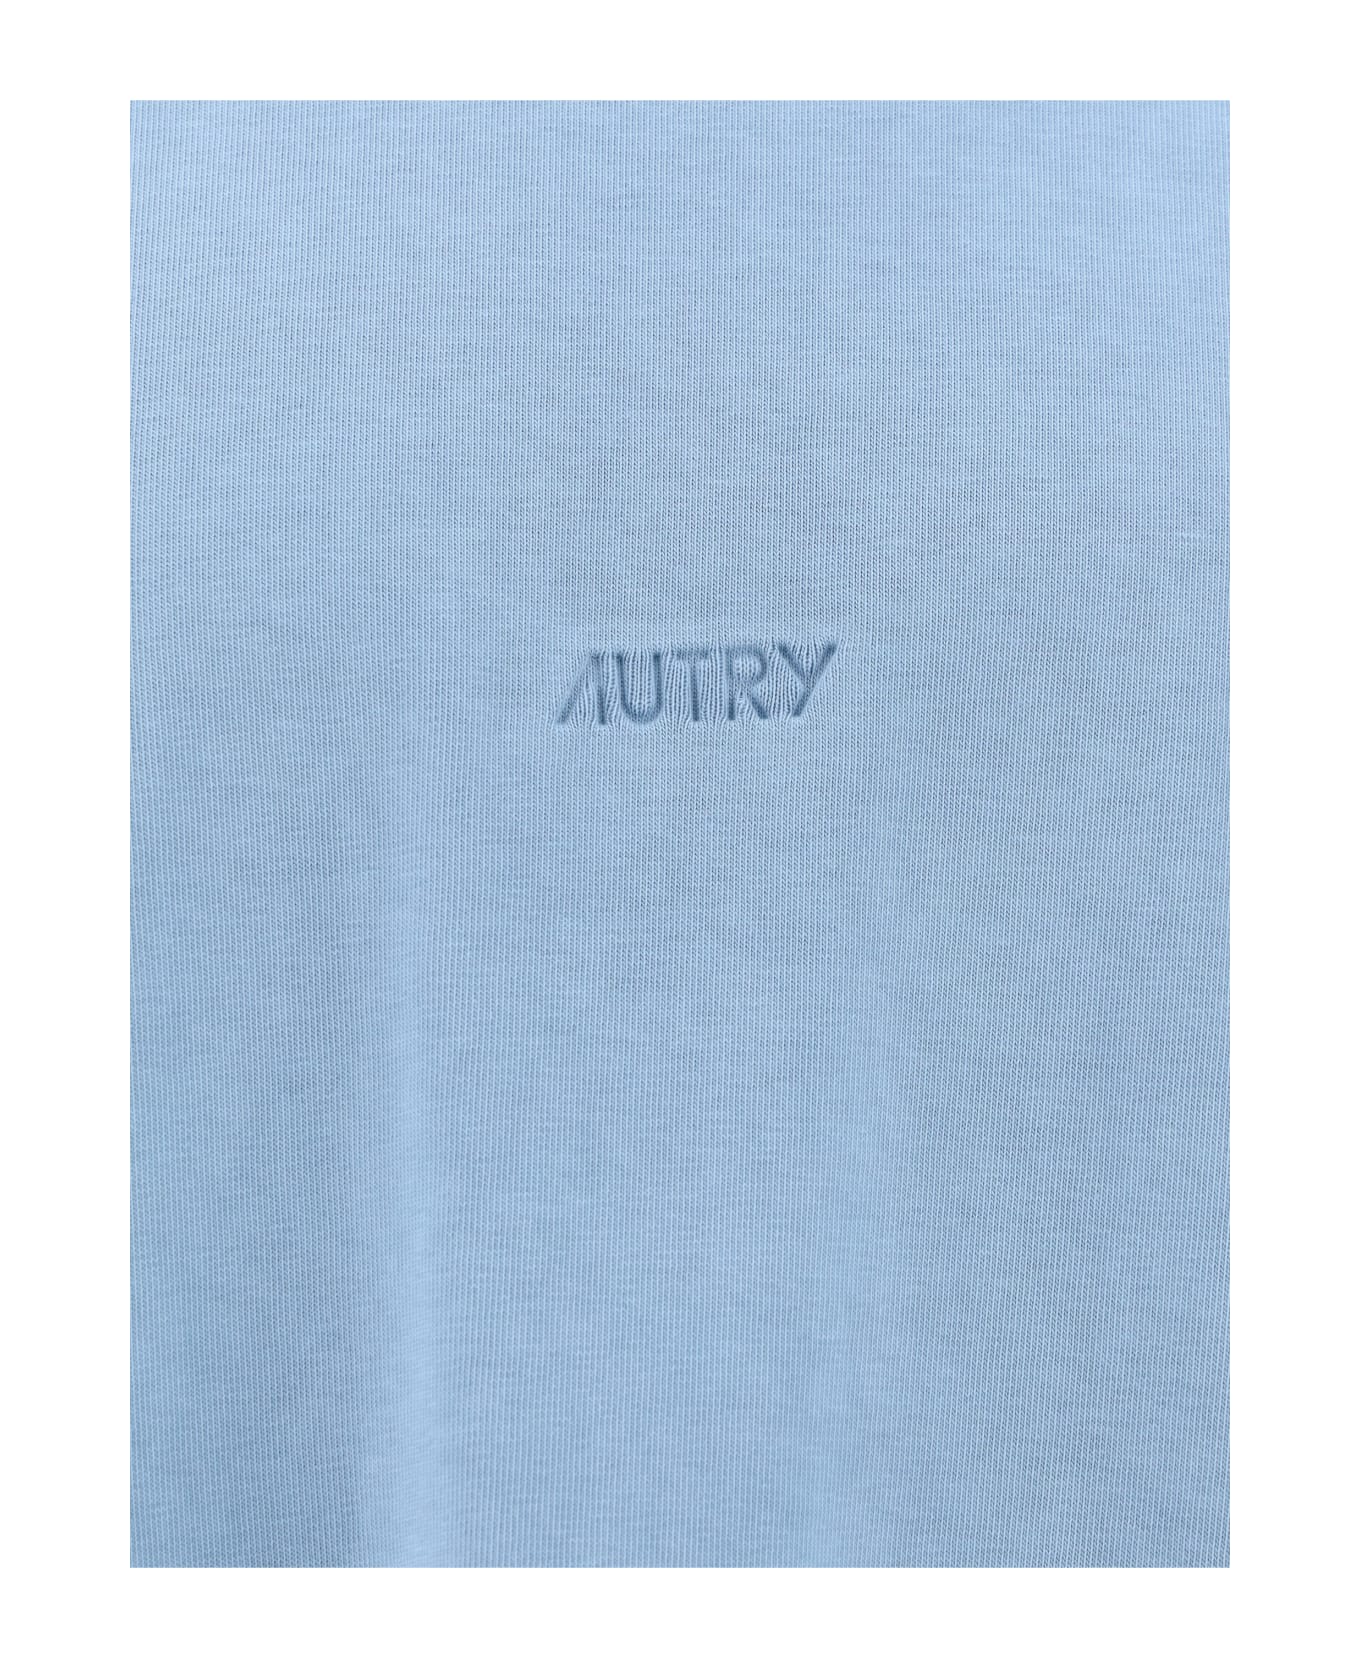 Autry T-shirt - Azzurro シャツ